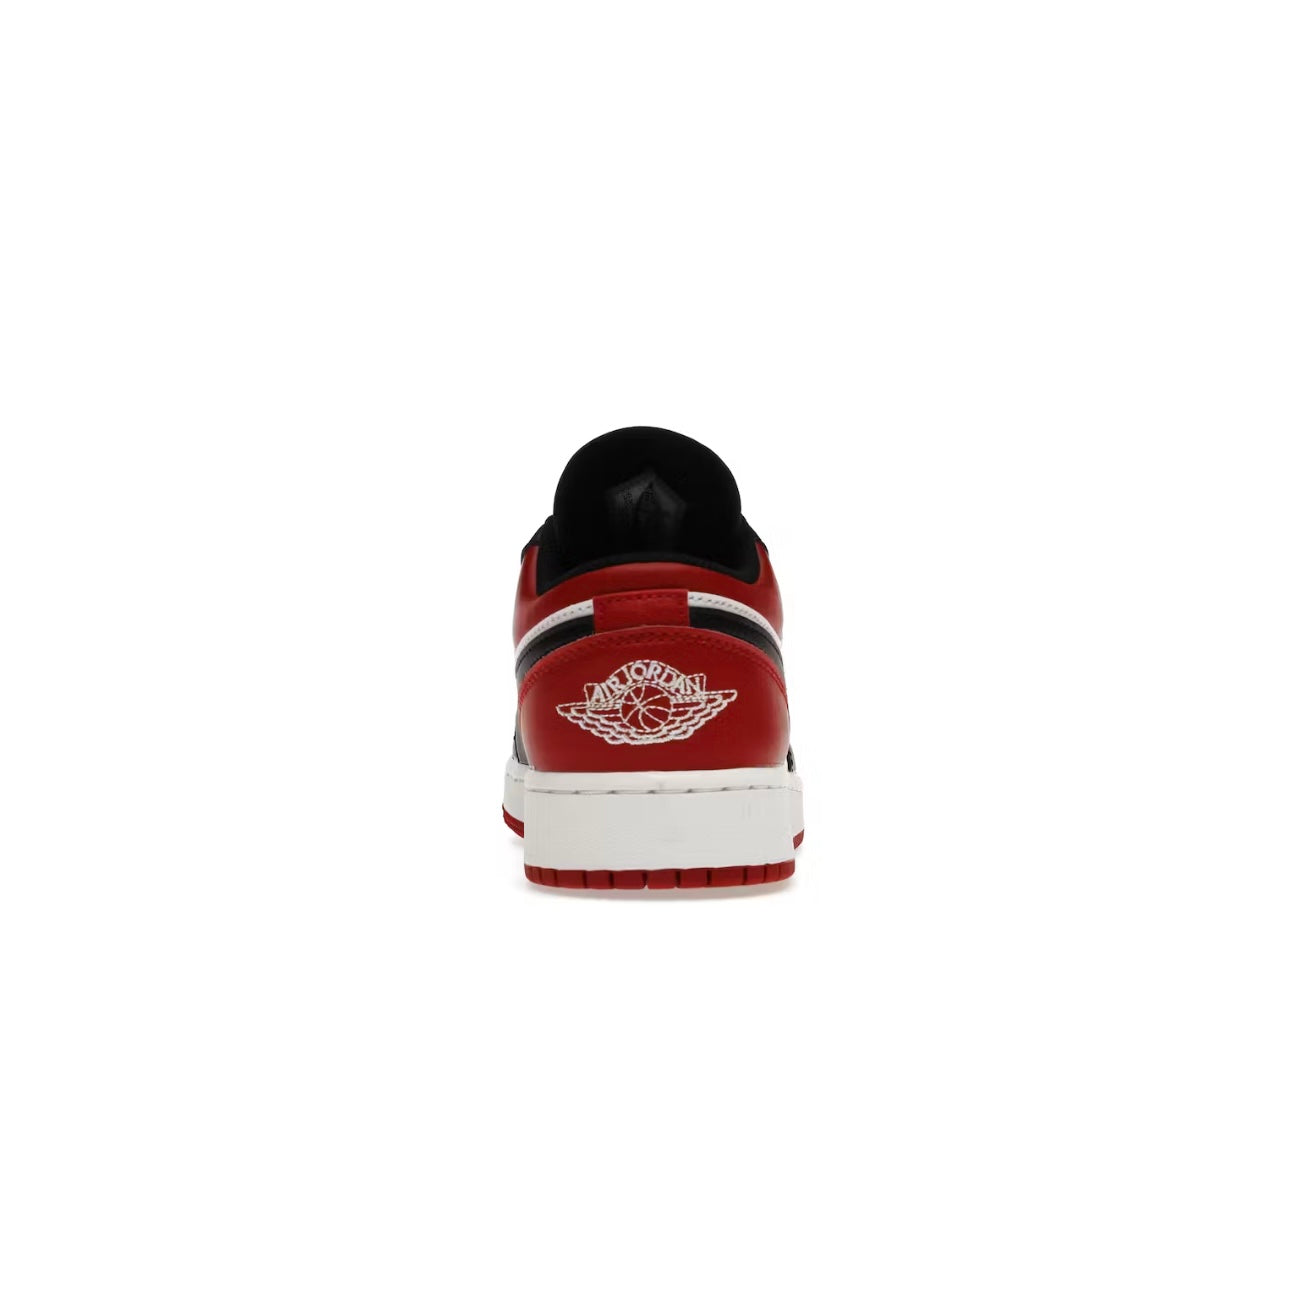 Air Jordan 1 Low Bred Toe - PENGUIN SHOES Penguin Shoes